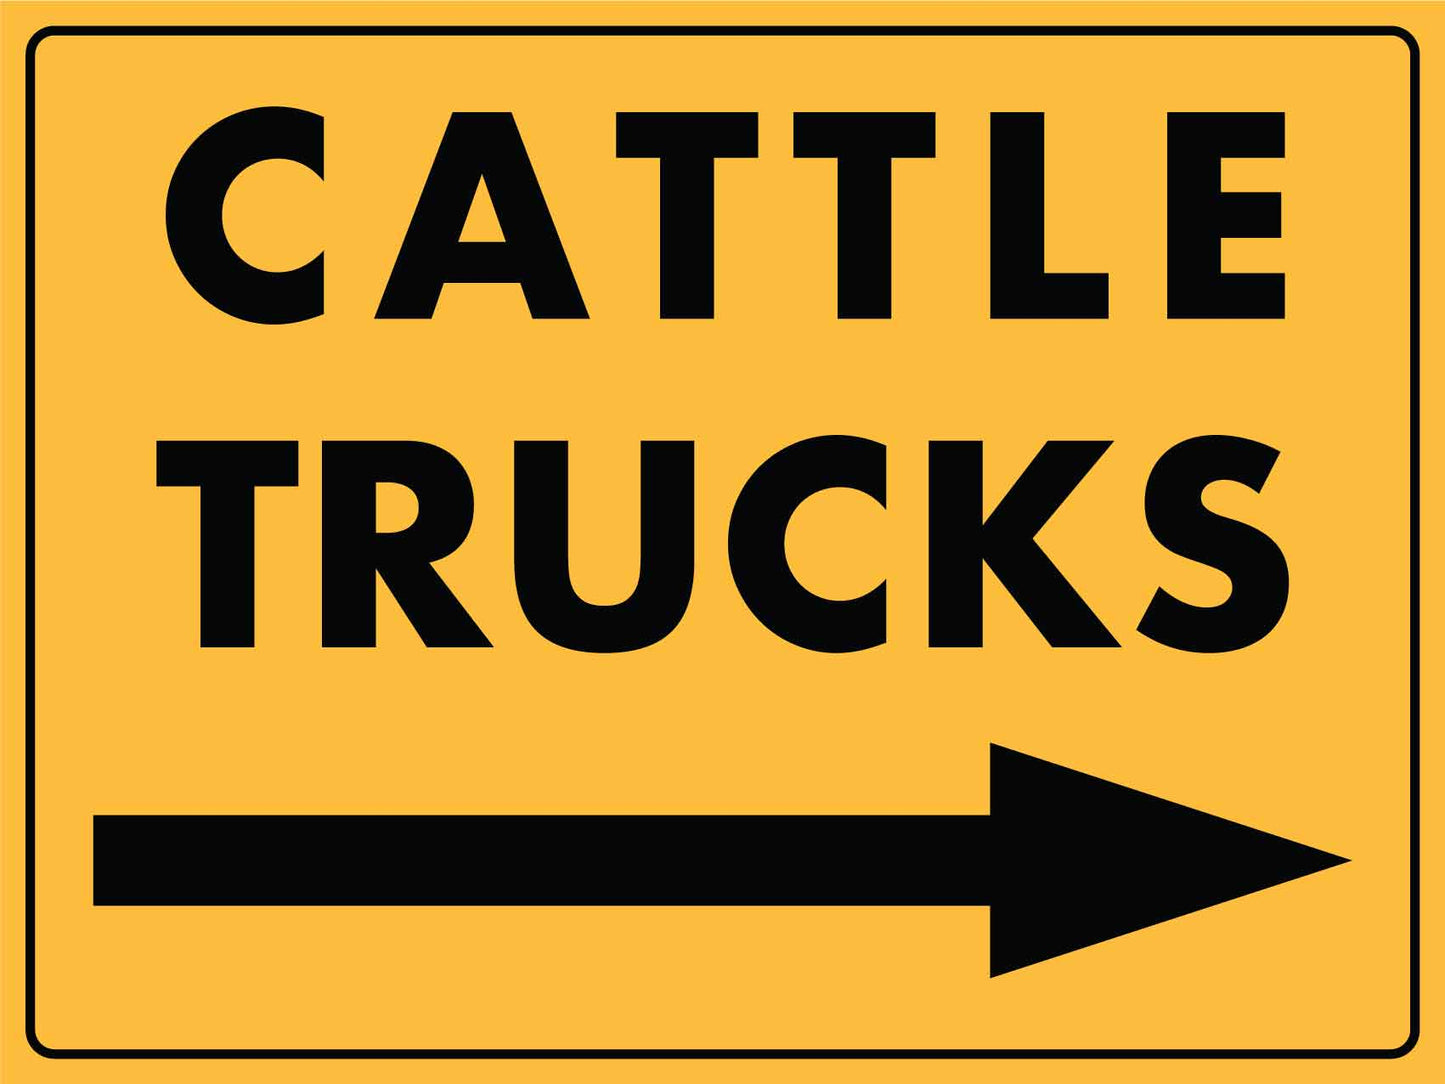 Cattle Trucks (Arrow Right) Sign